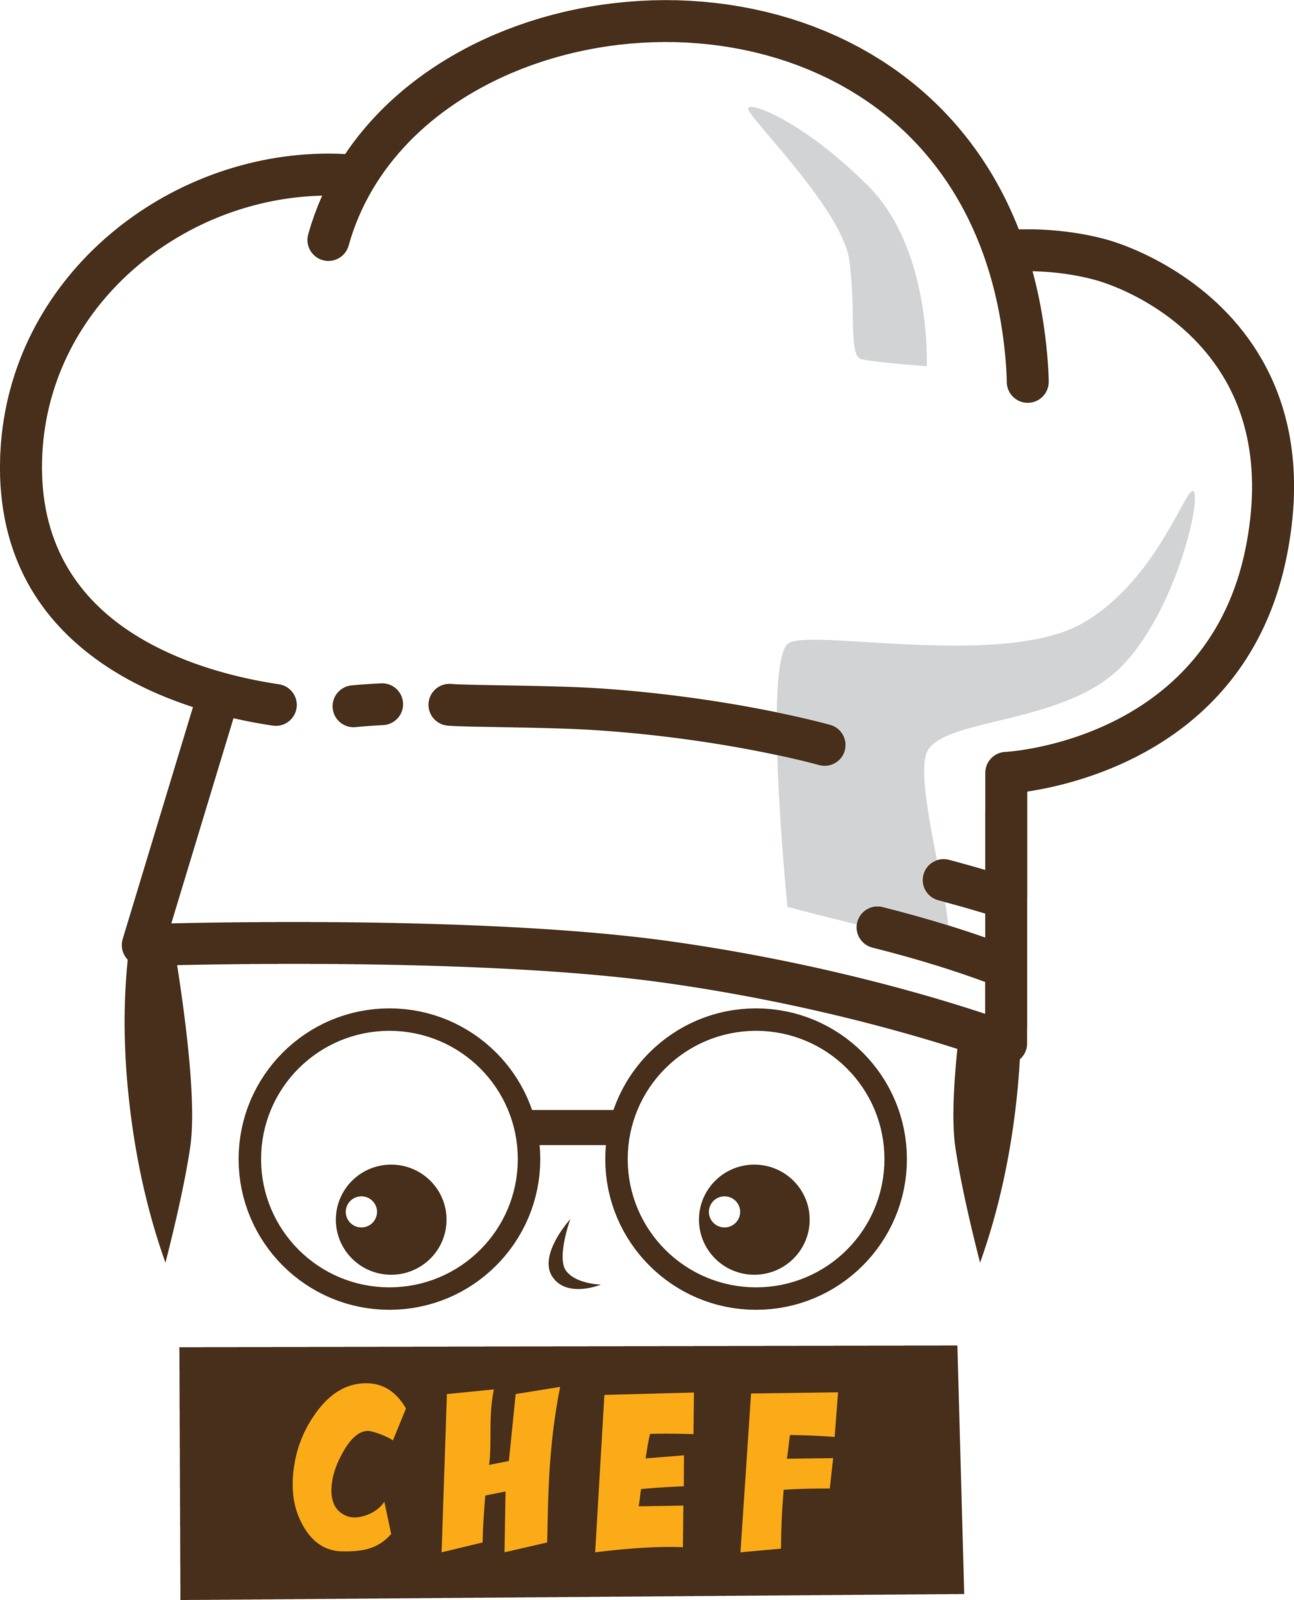 male master chef character cartoon art logo icon vector